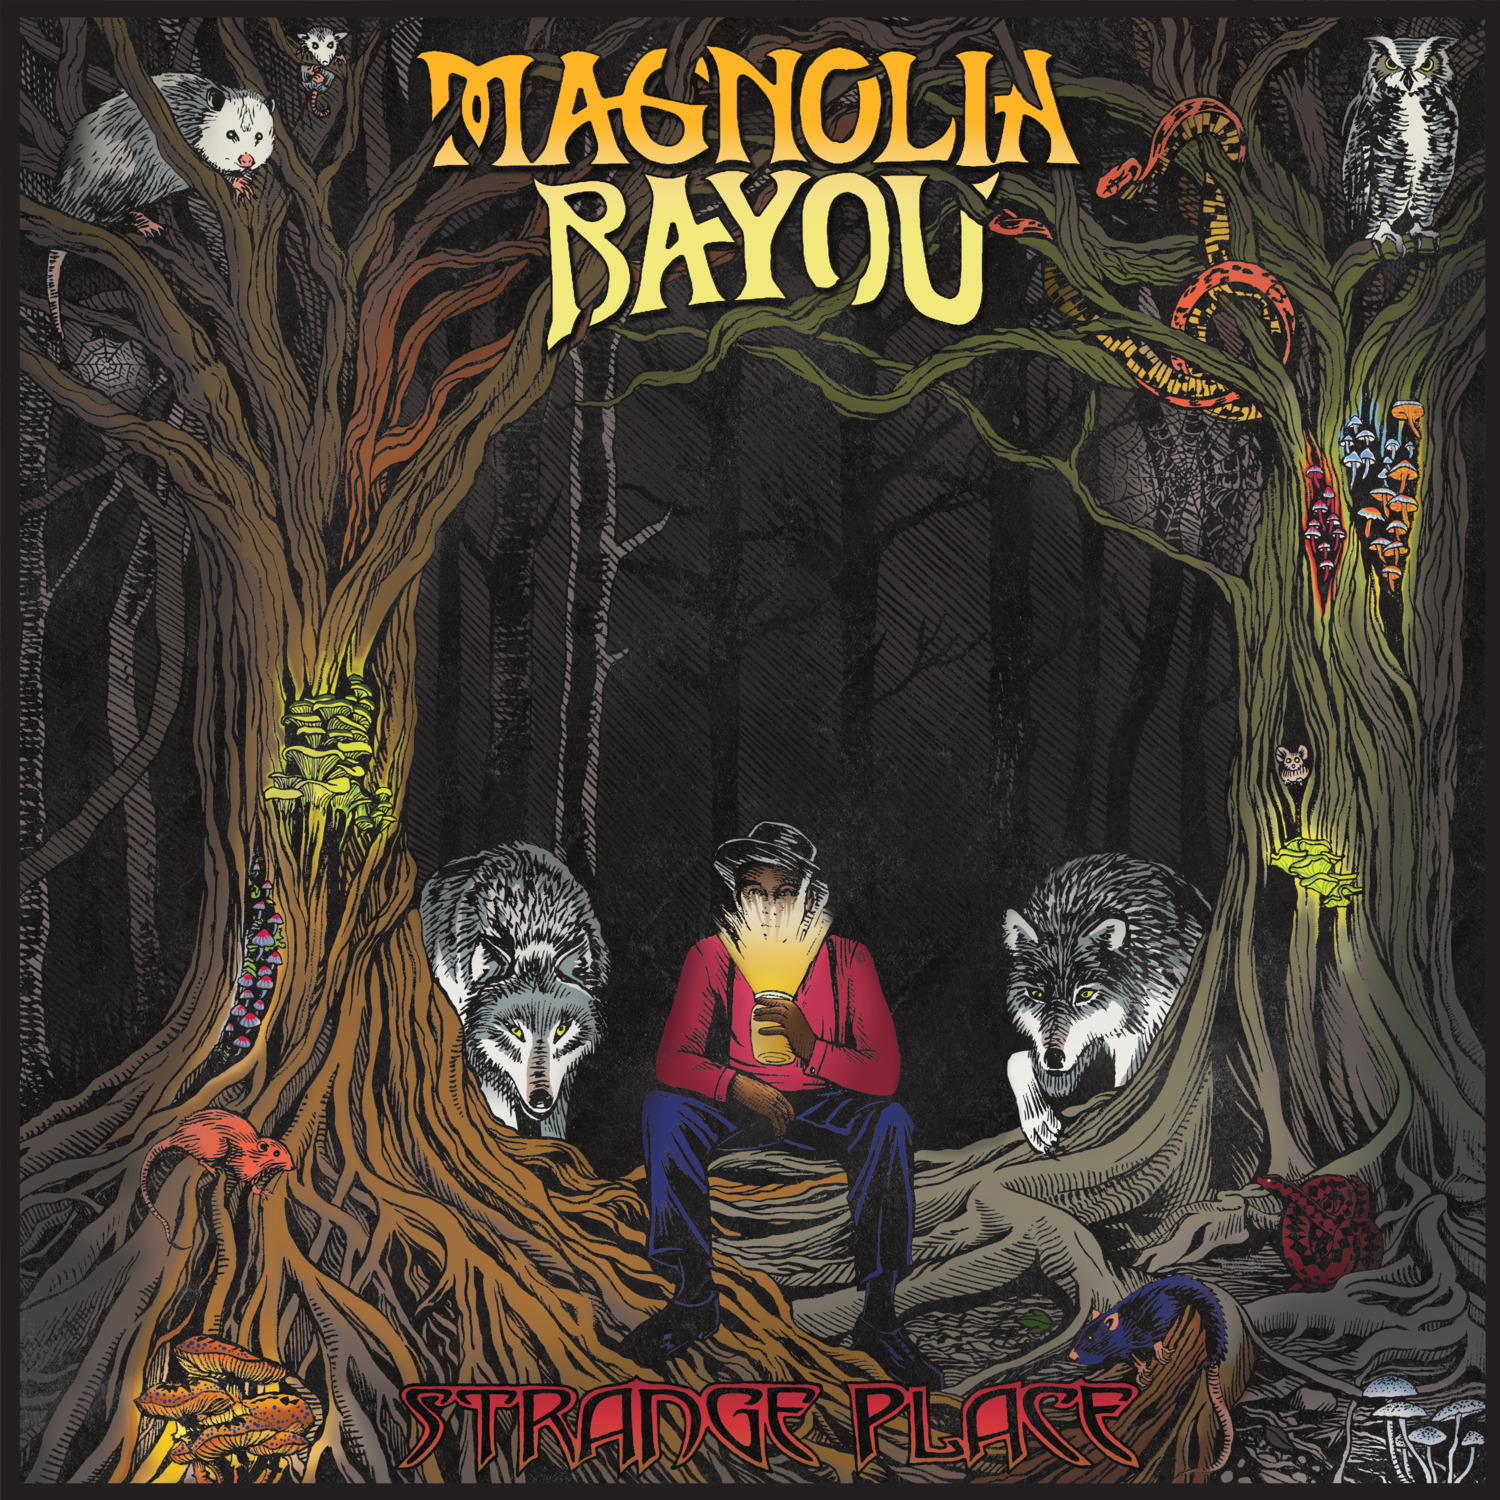 Icepick for September – Magnolia Bayou